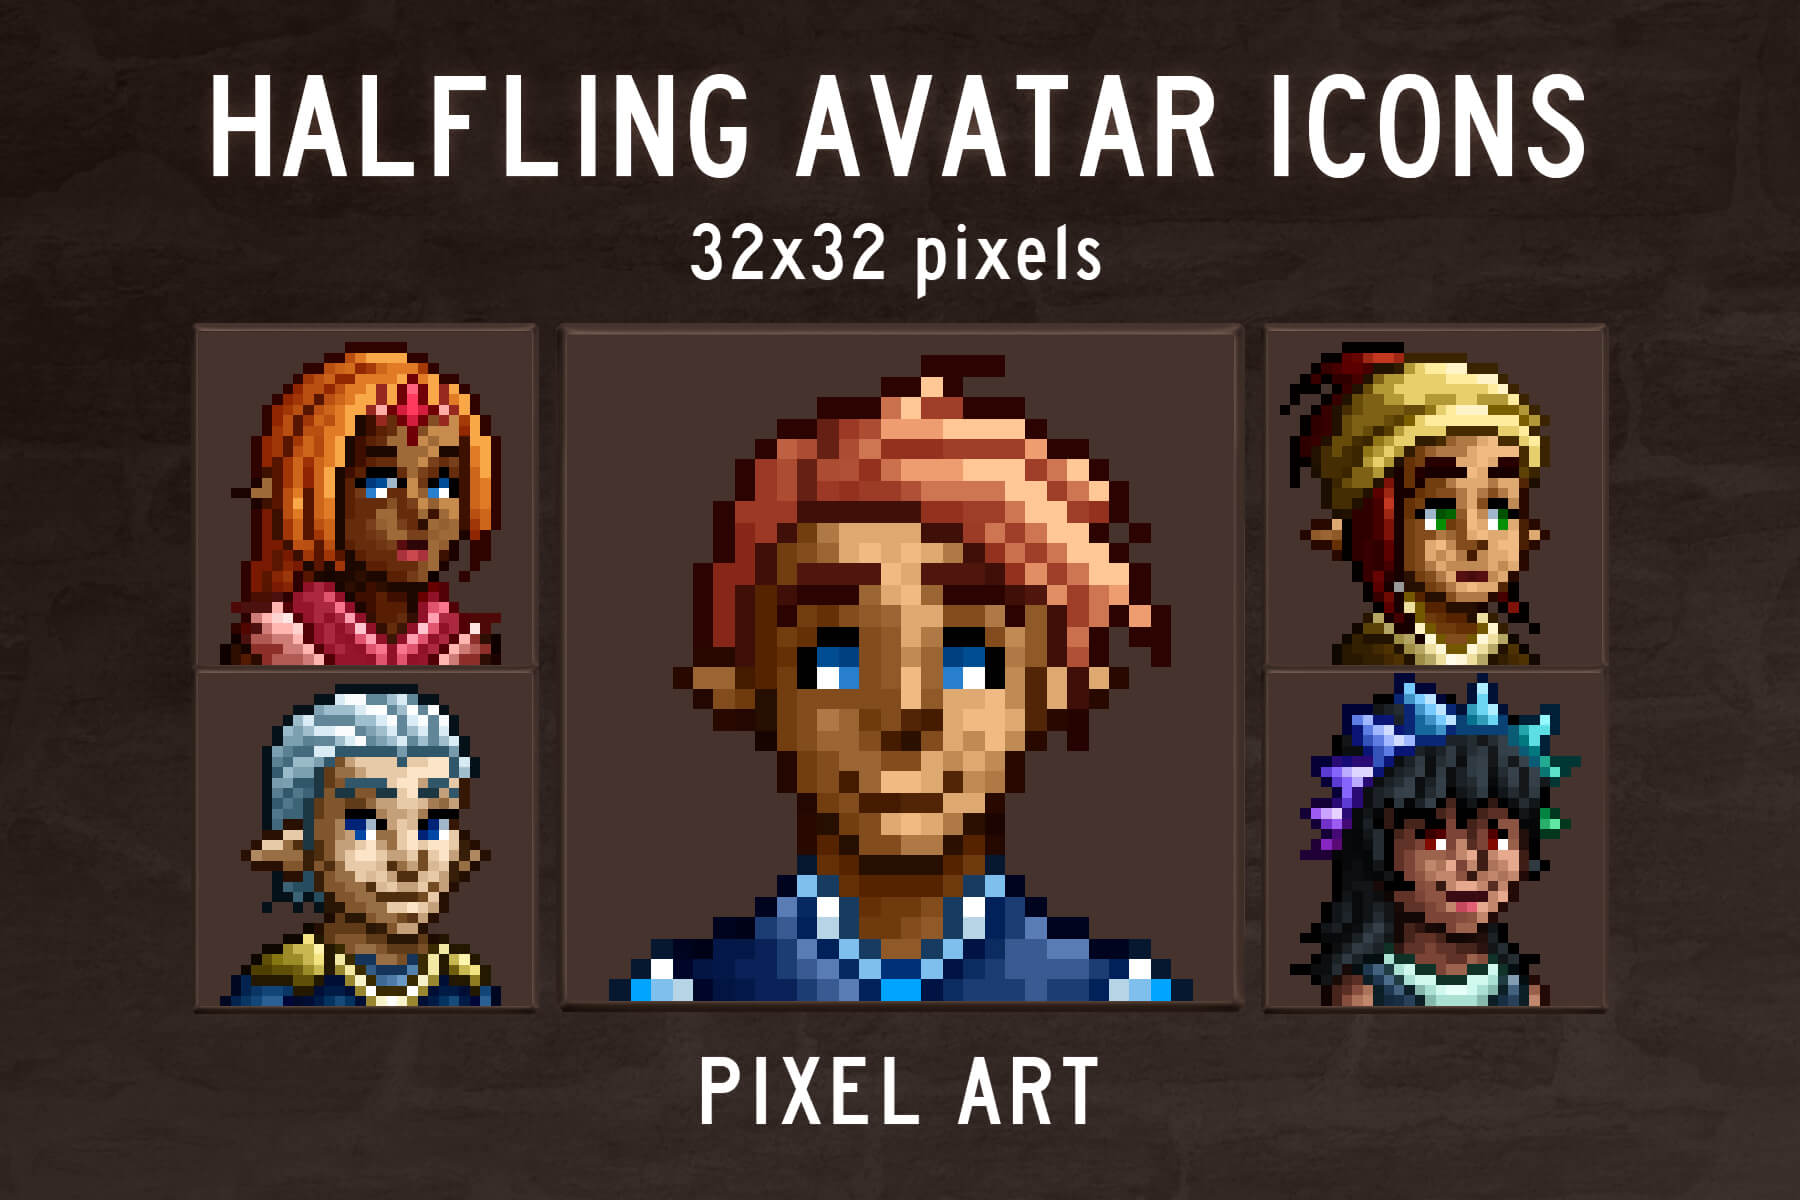 Icones 2d Pixel Para Jogos 3 by minion-de-Gandalf on DeviantArt